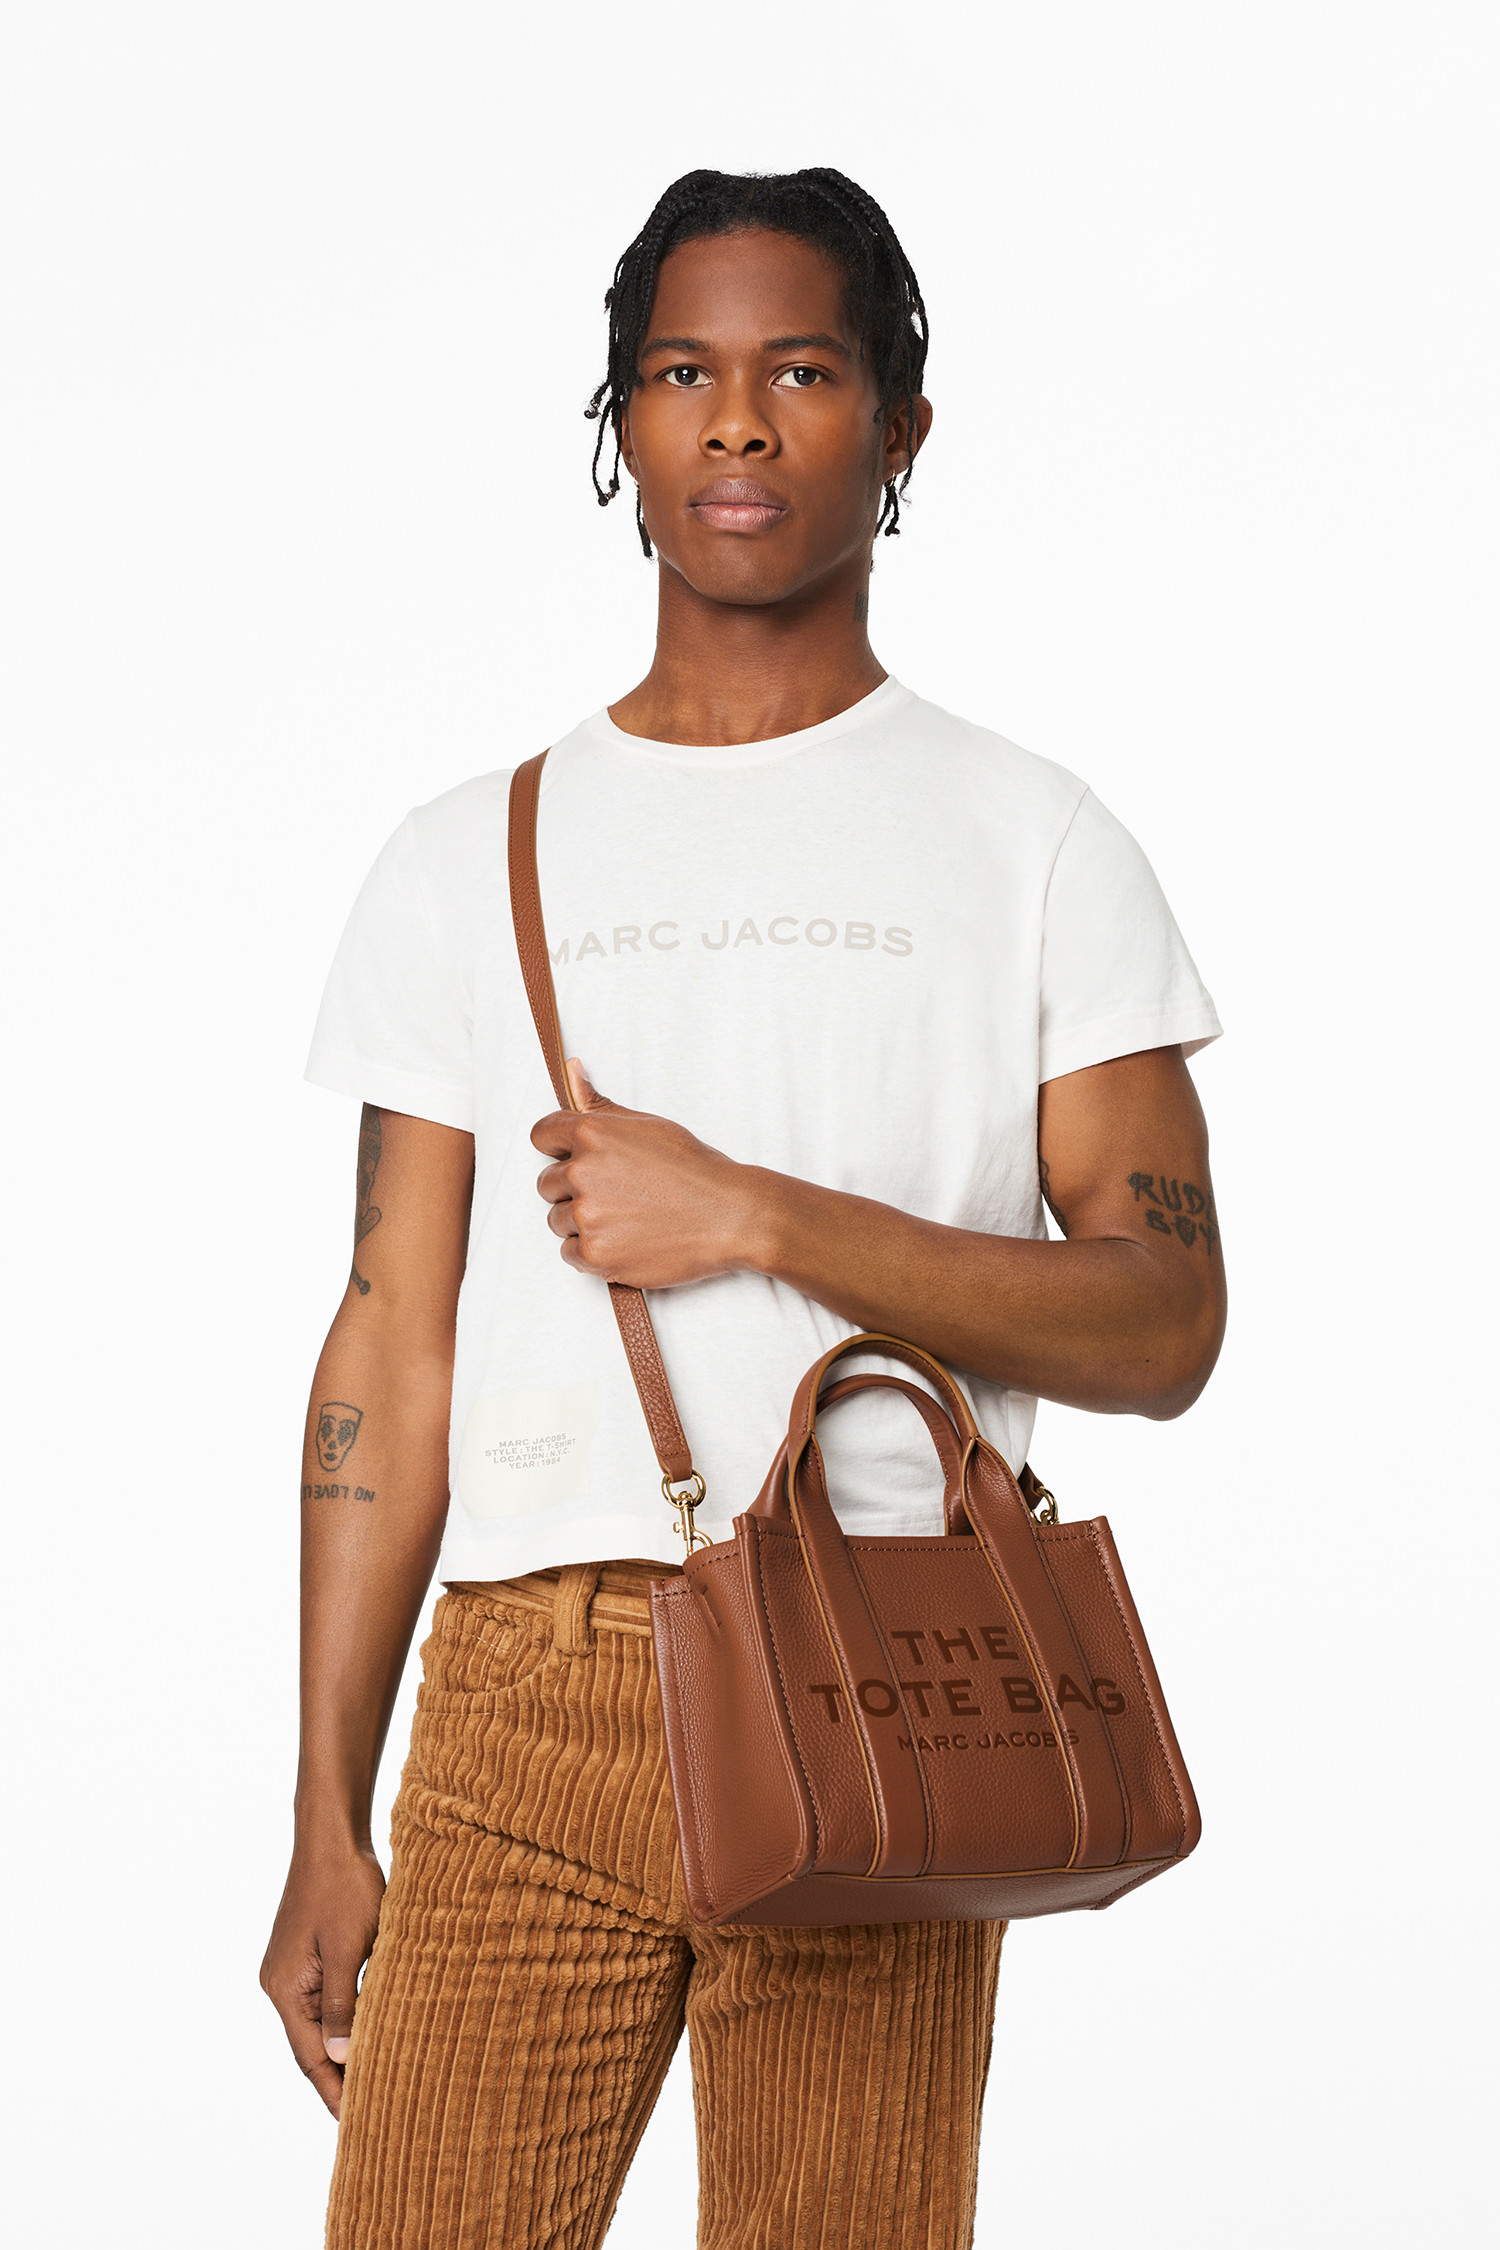 Marc Jacobs The Leather Mini Tote Bag ARGAN OIL (Brown) H009L01SP21 212  Ladies